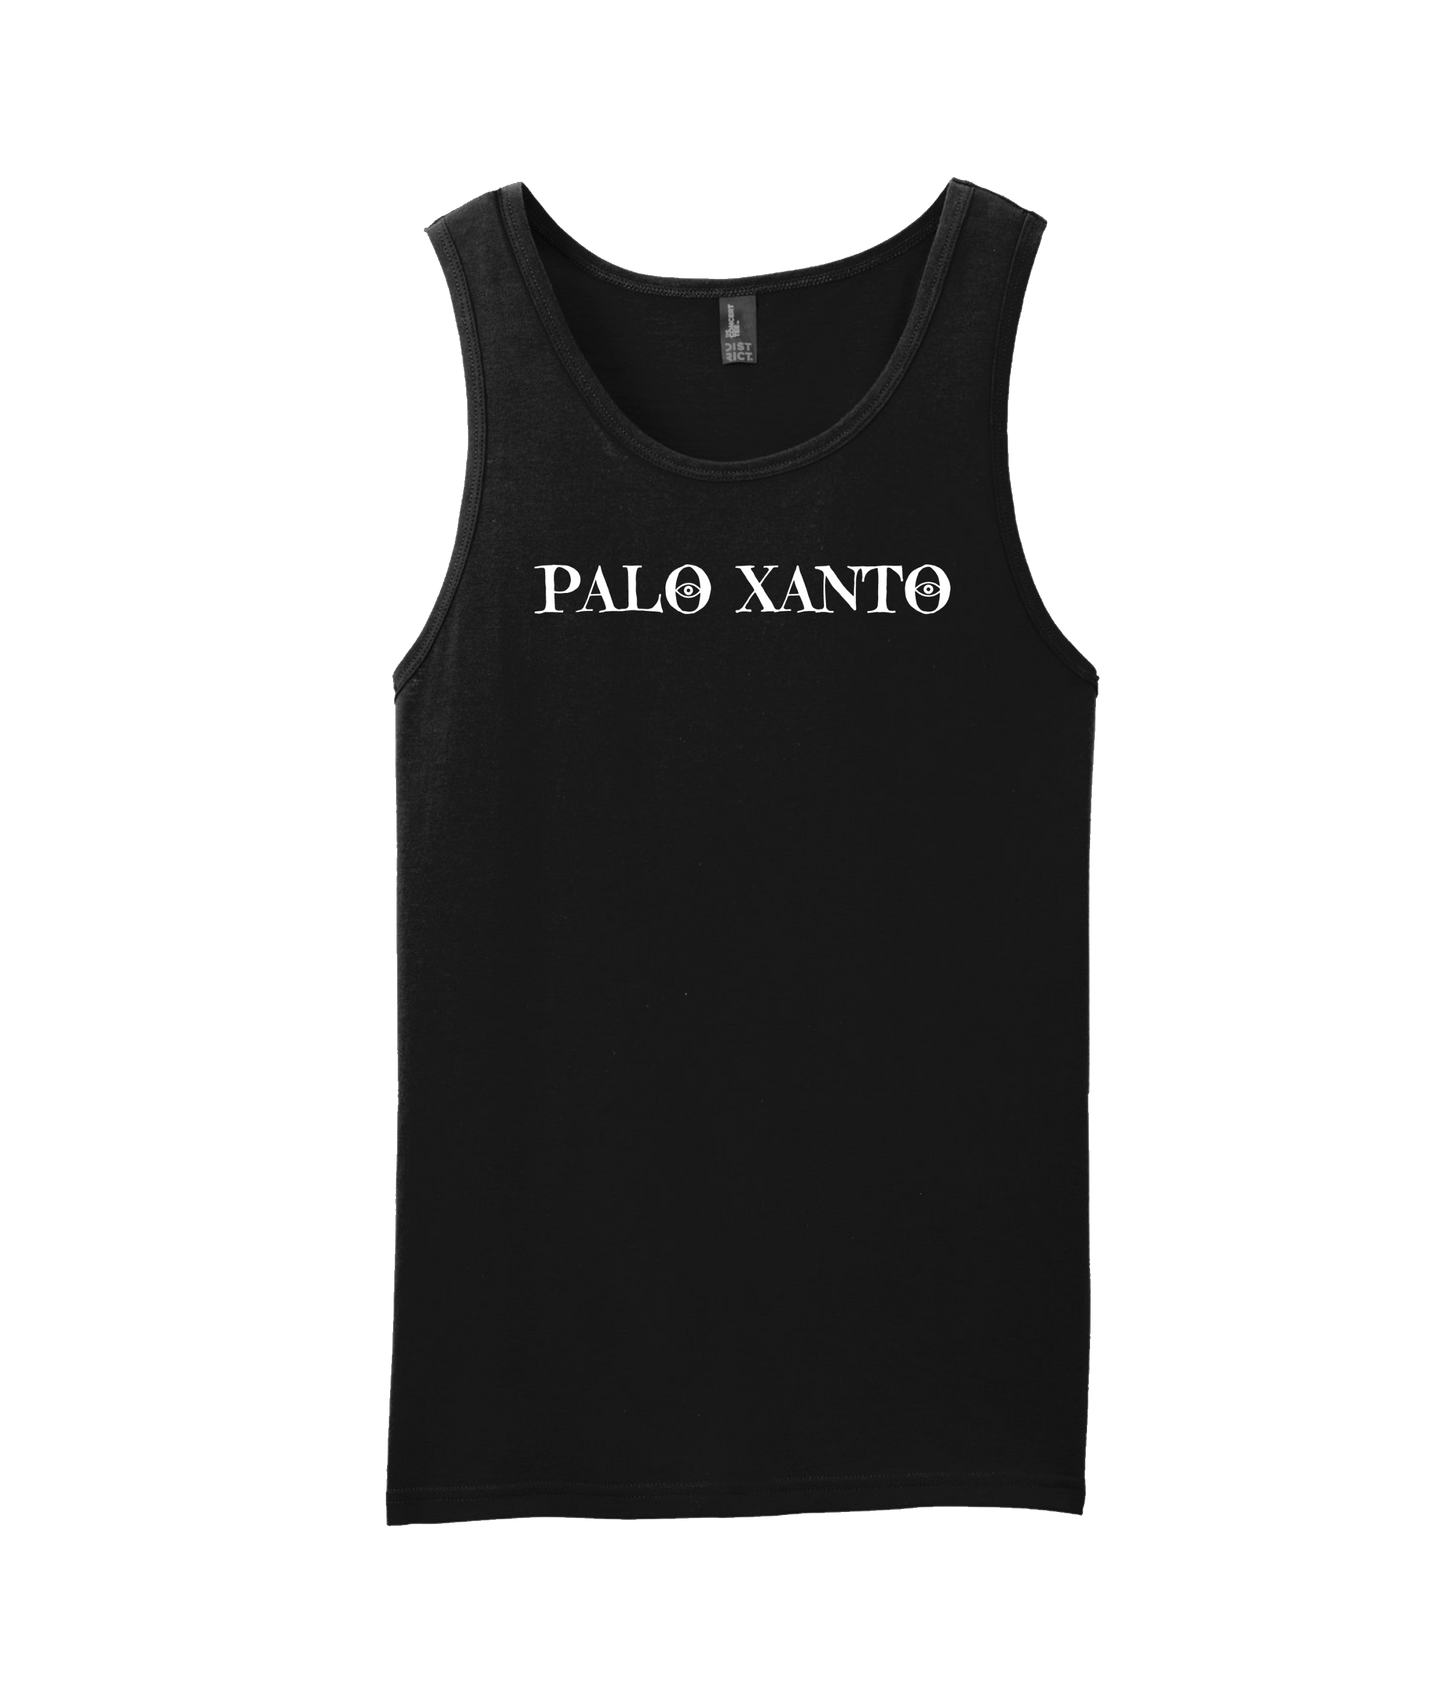 Palo Xanto - Logo - Black Tank Top